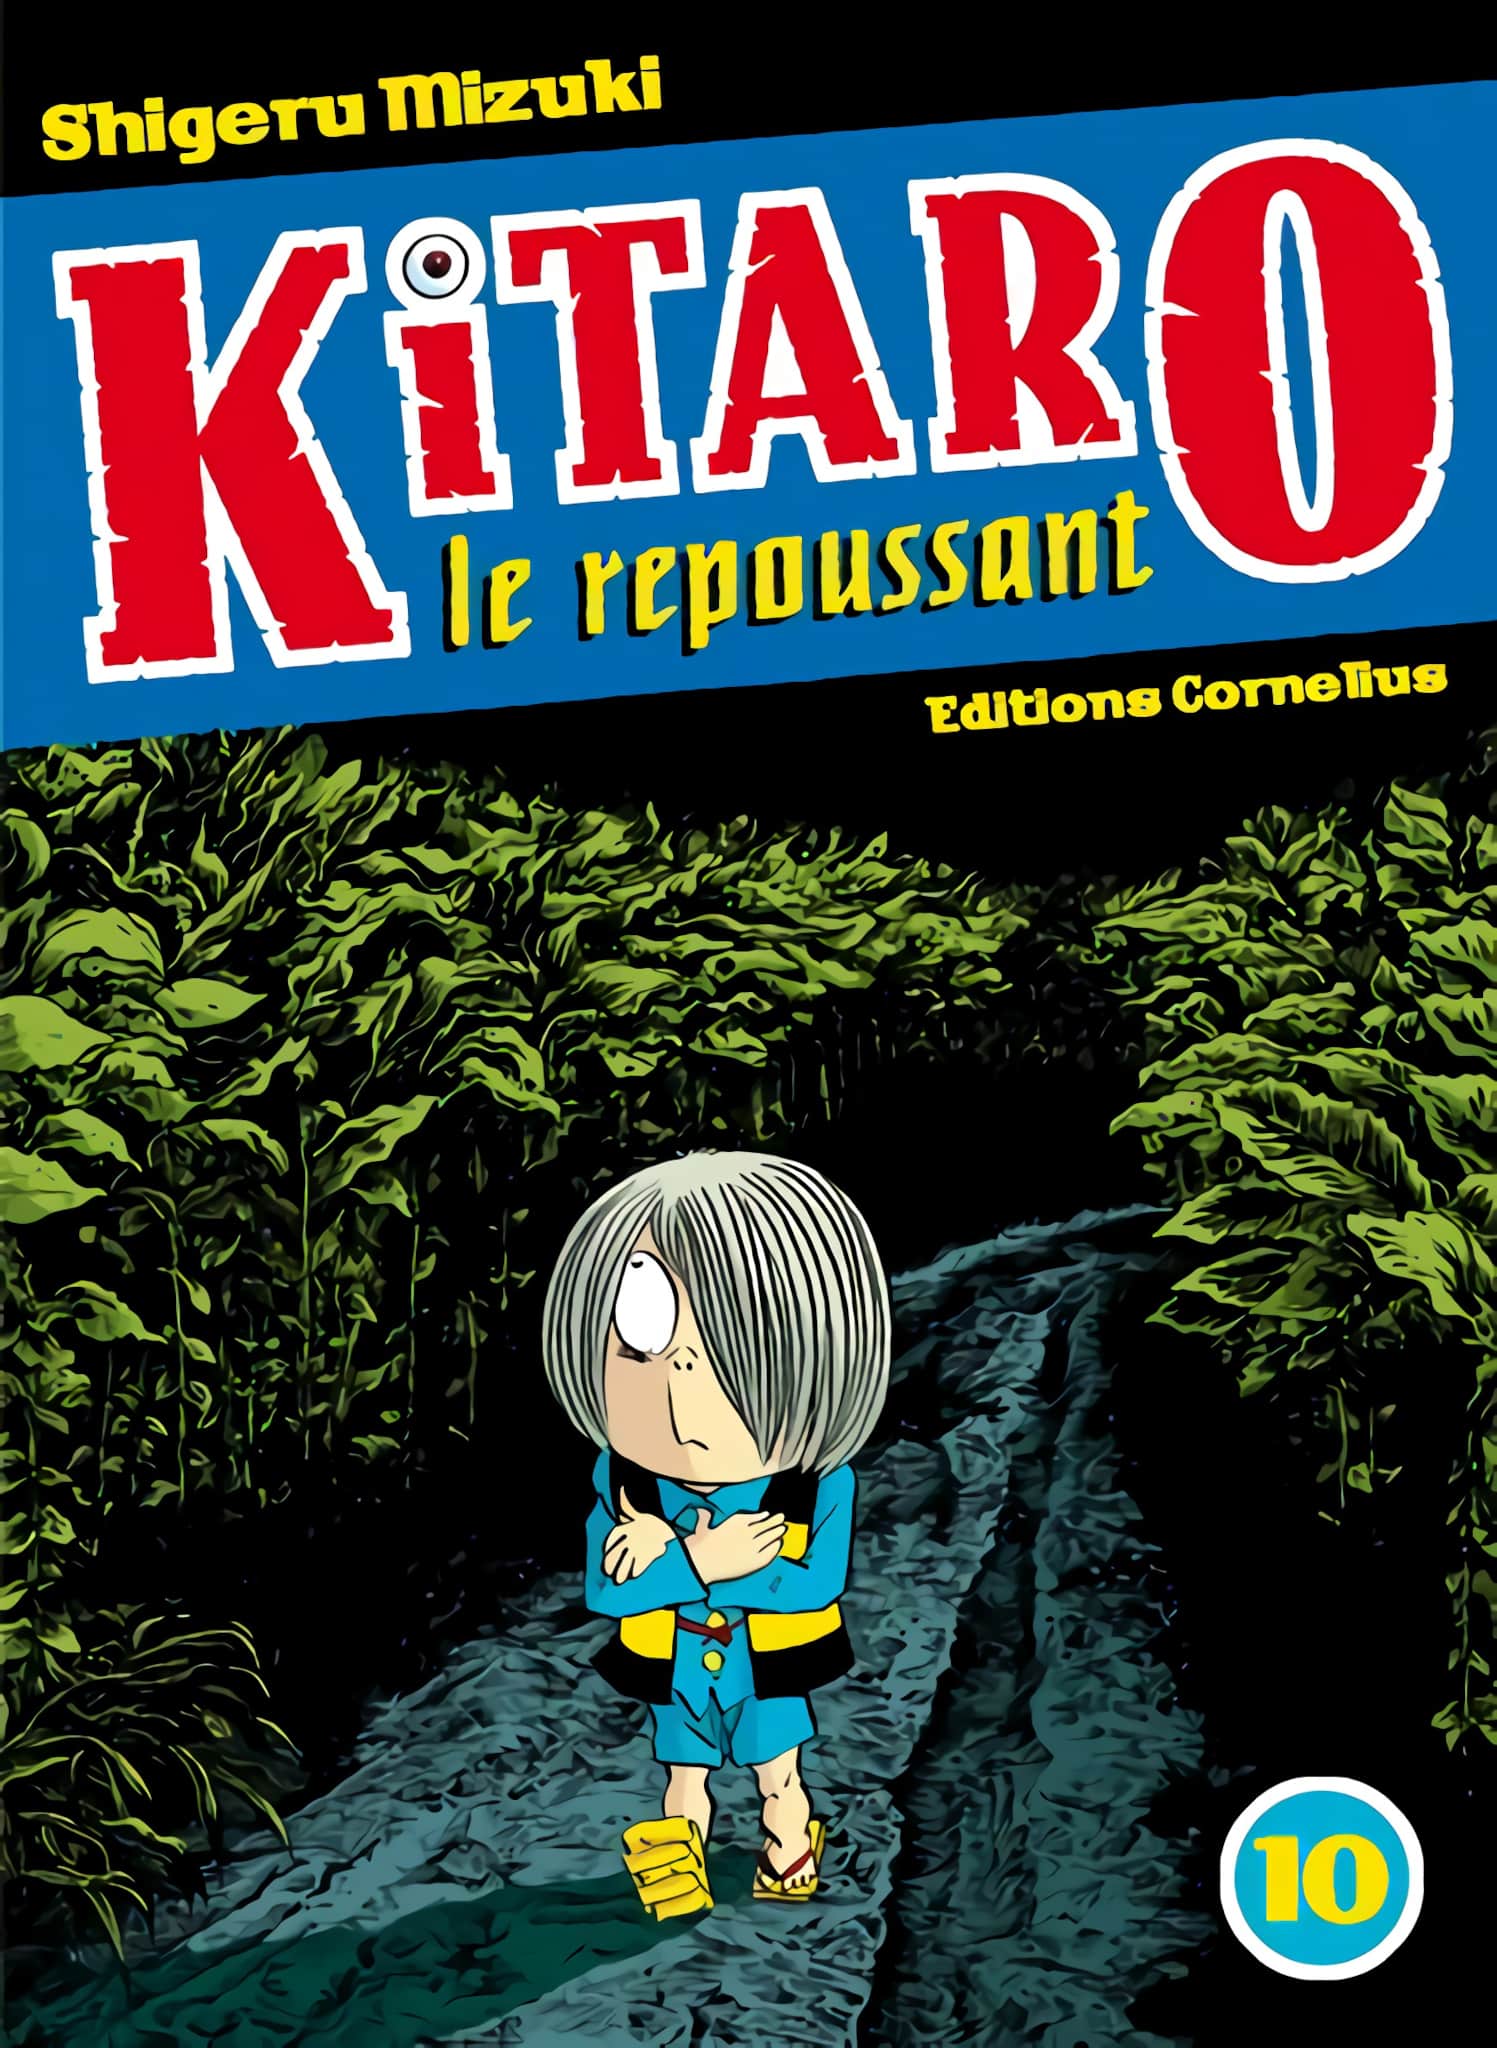 Tome 10 du manga Kitaro le repoussant